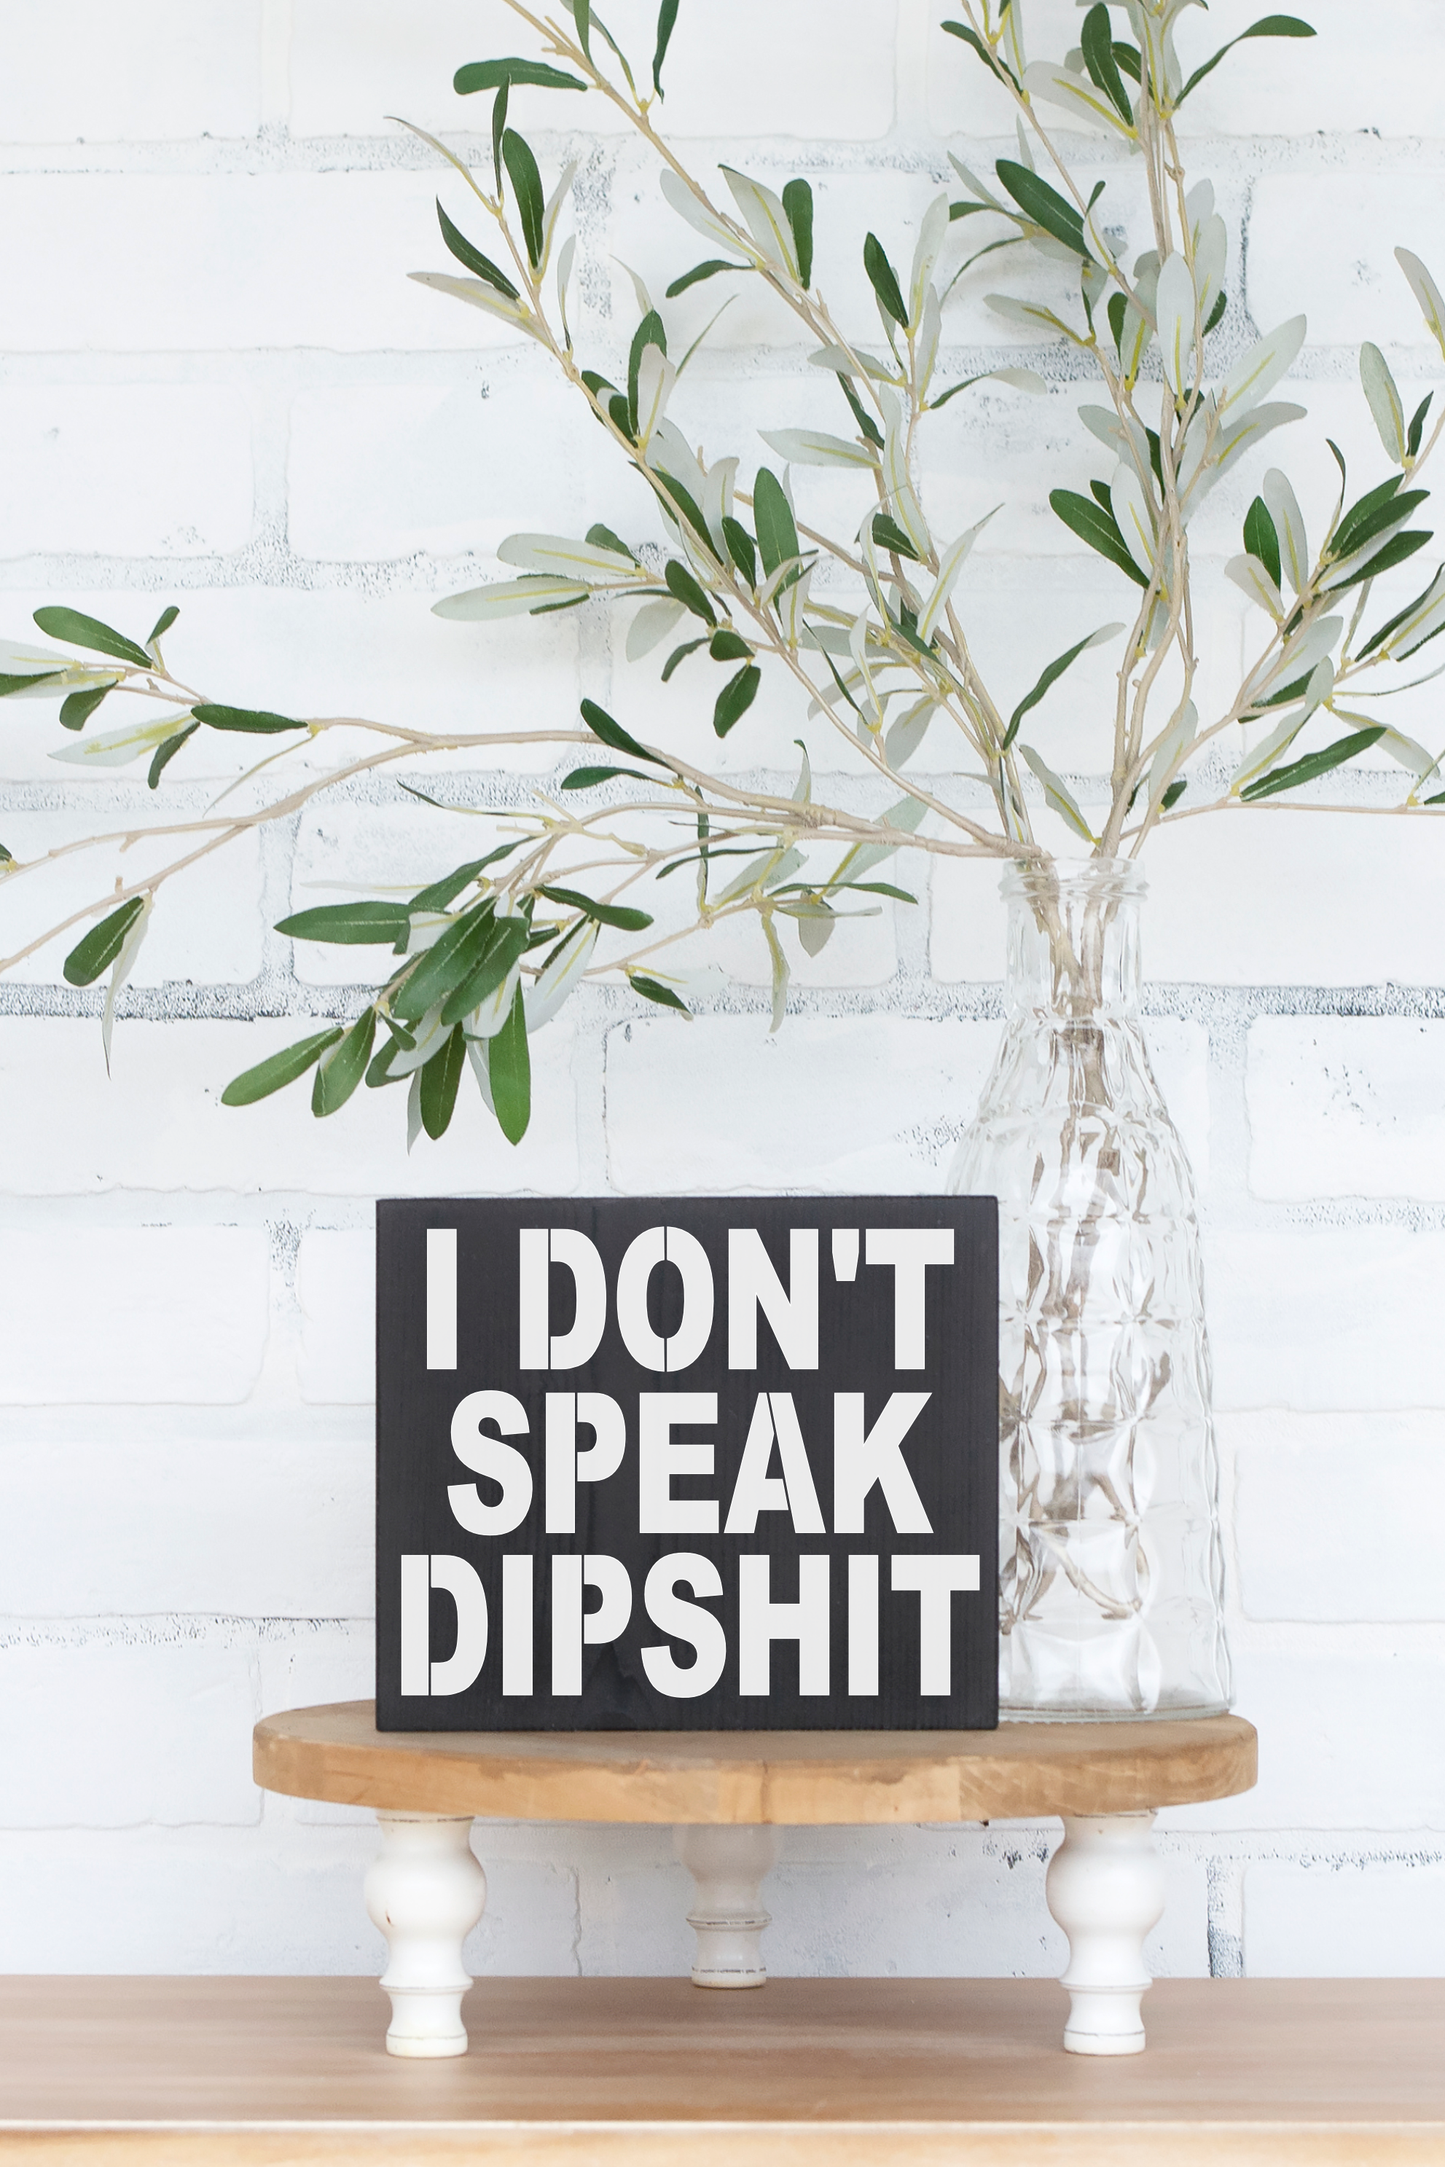 I don't speak dipshit - Black wood sign - Funny humorous home decor